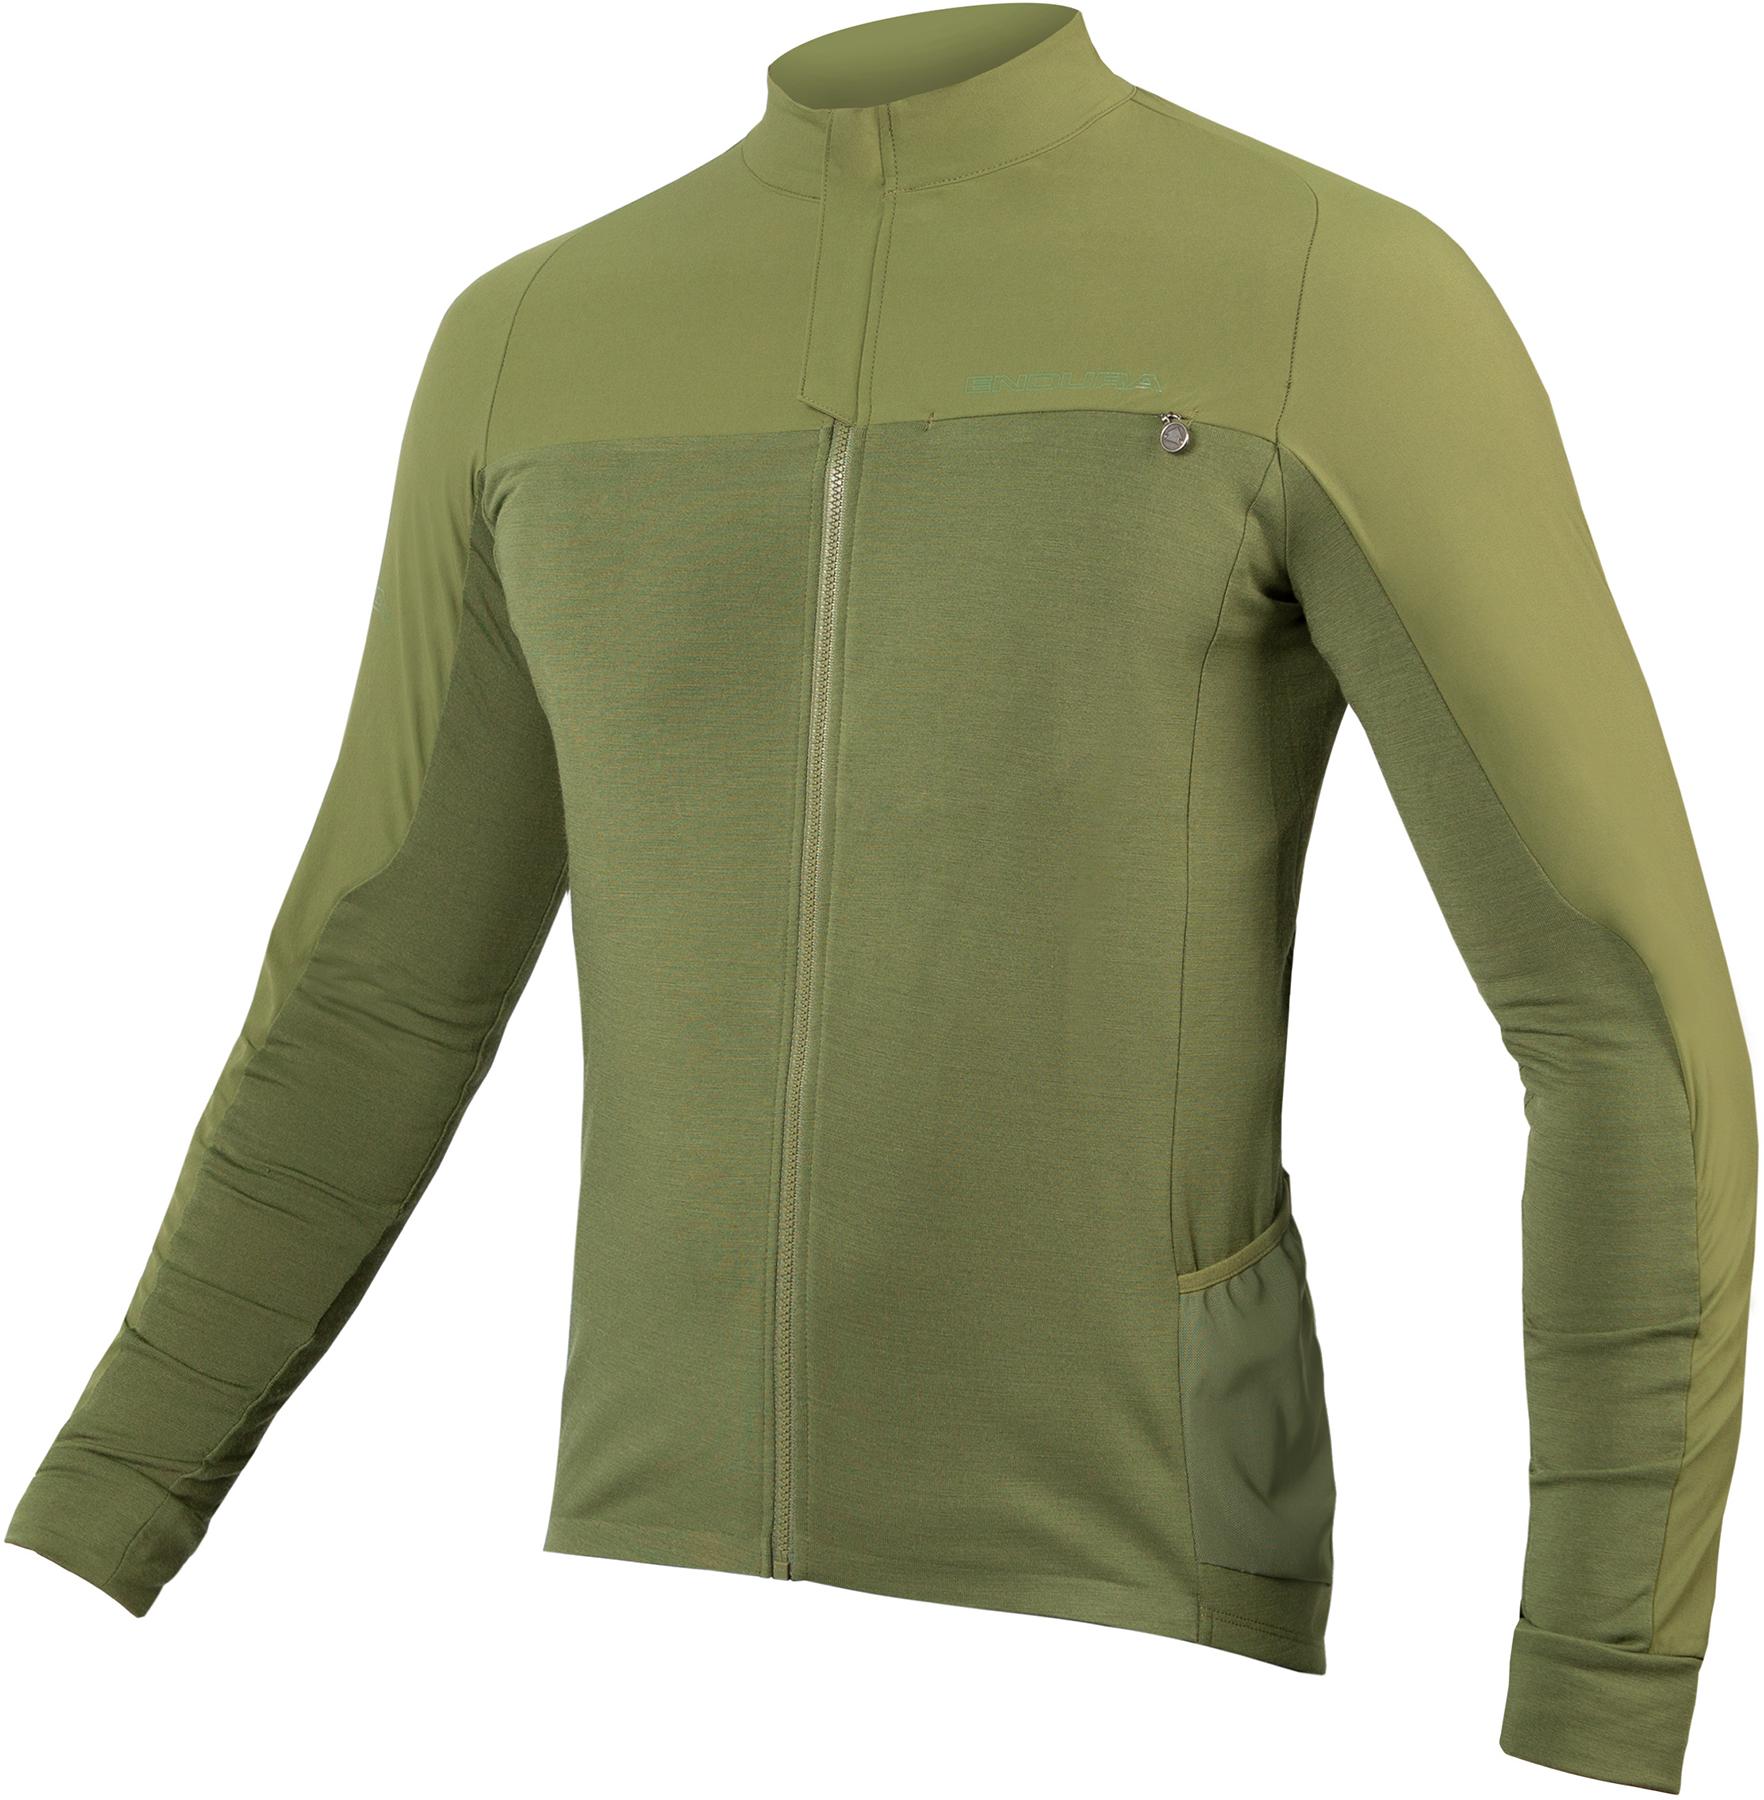 Endura Gv500 Long Sleeve Jersey - Olive Green